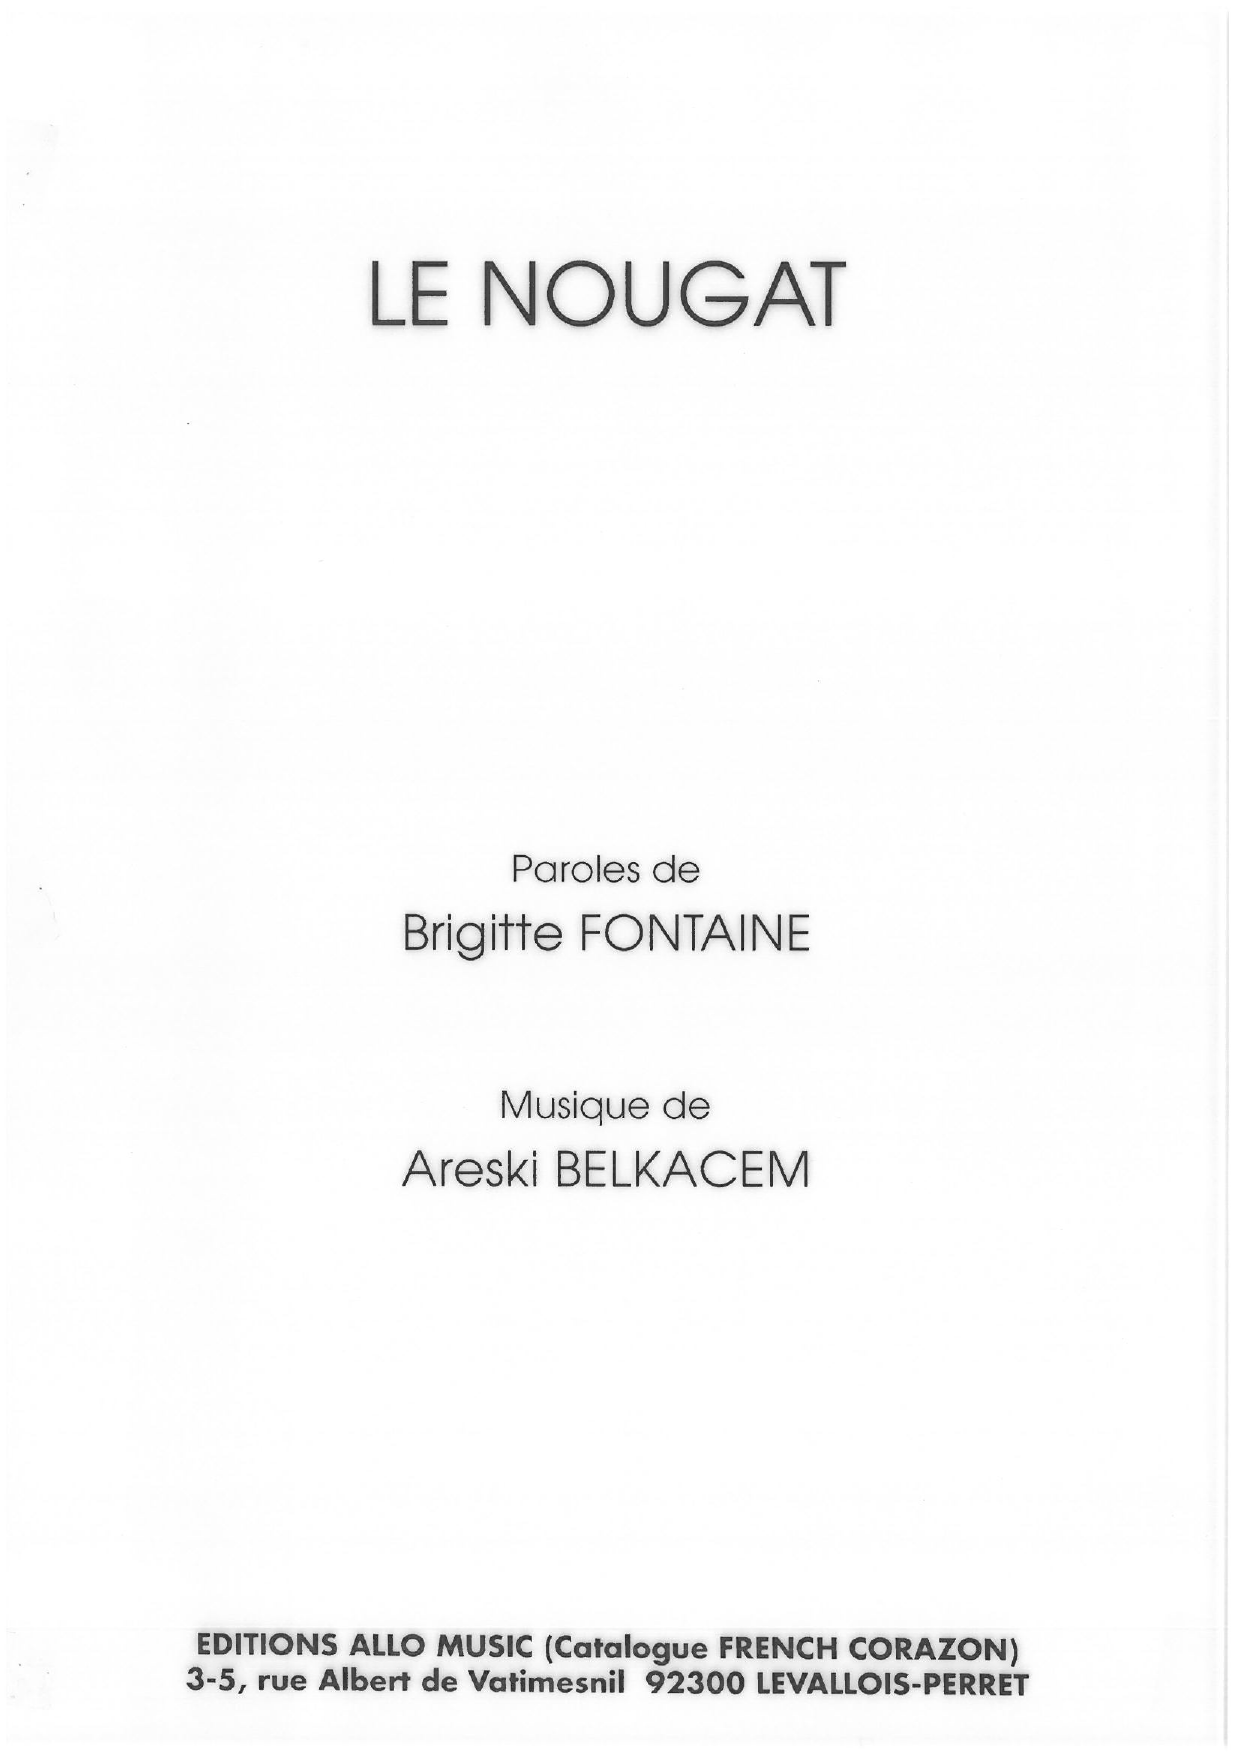 Brigitte Fontaine & Areski Belkacem Le Nougat sheet music notes and chords arranged for Piano & Vocal